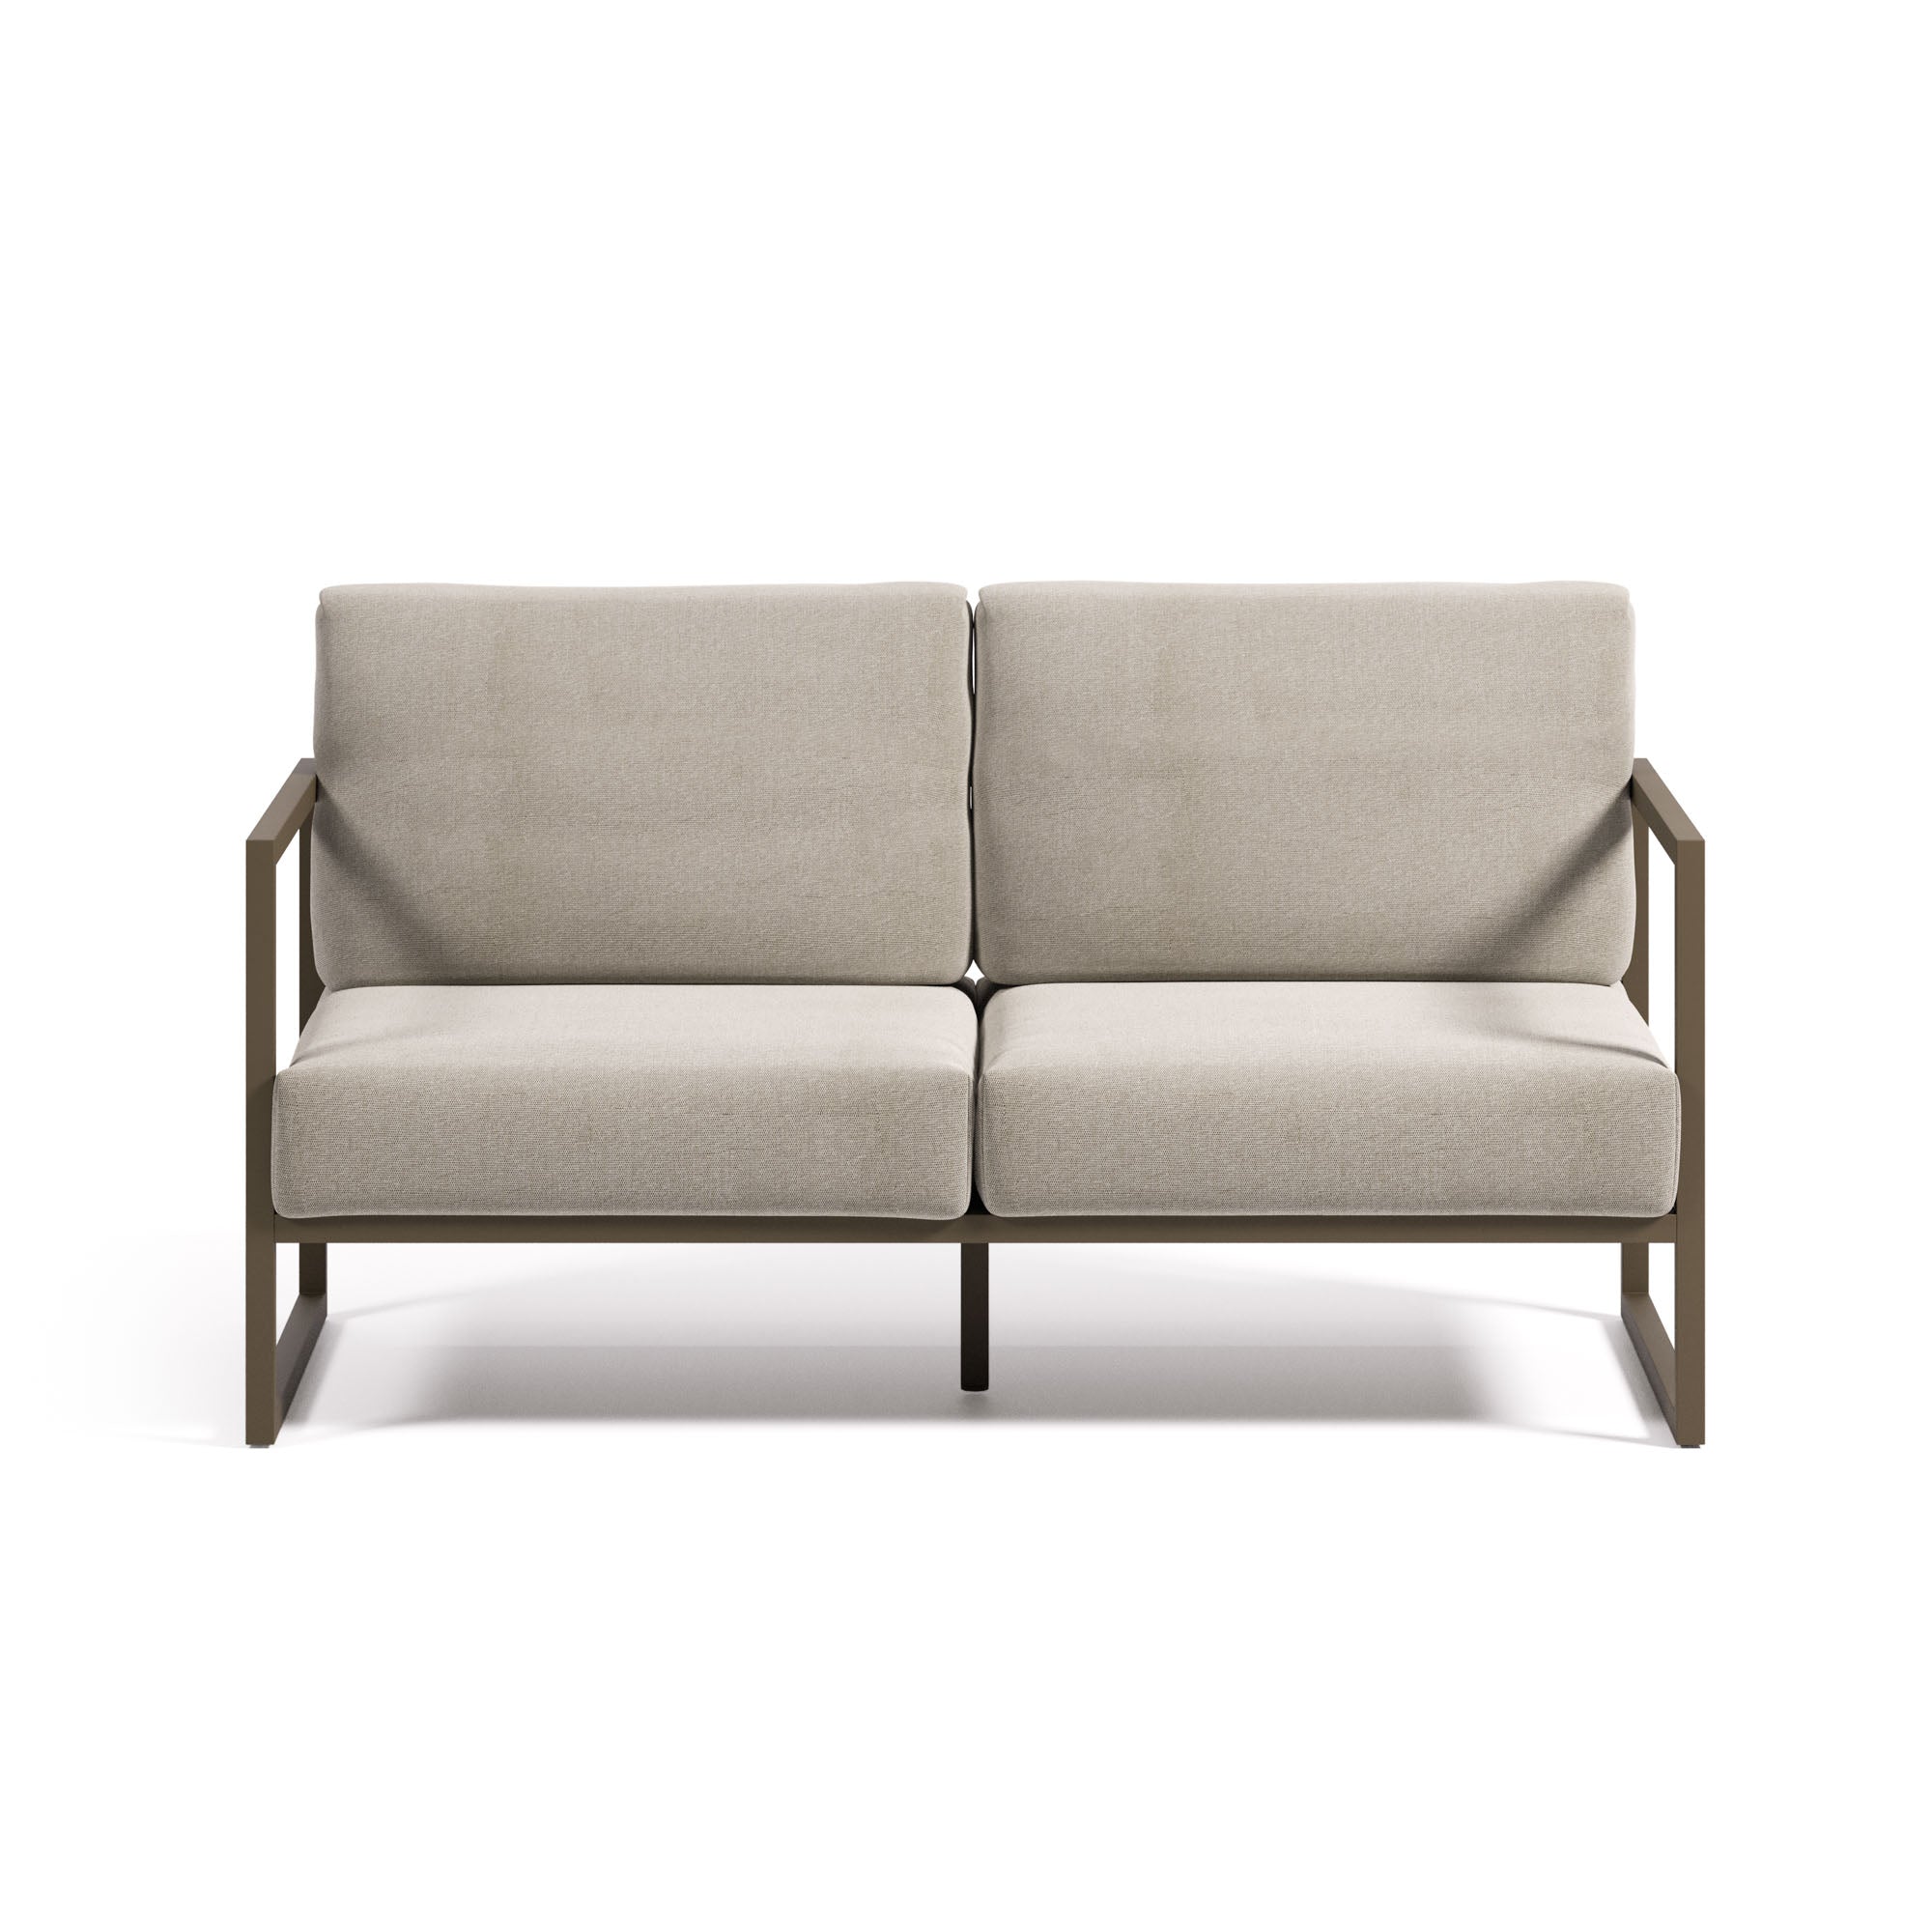 Comova 100% outdoor 2-seater sofa in light grey and green aluminium, 150 cm